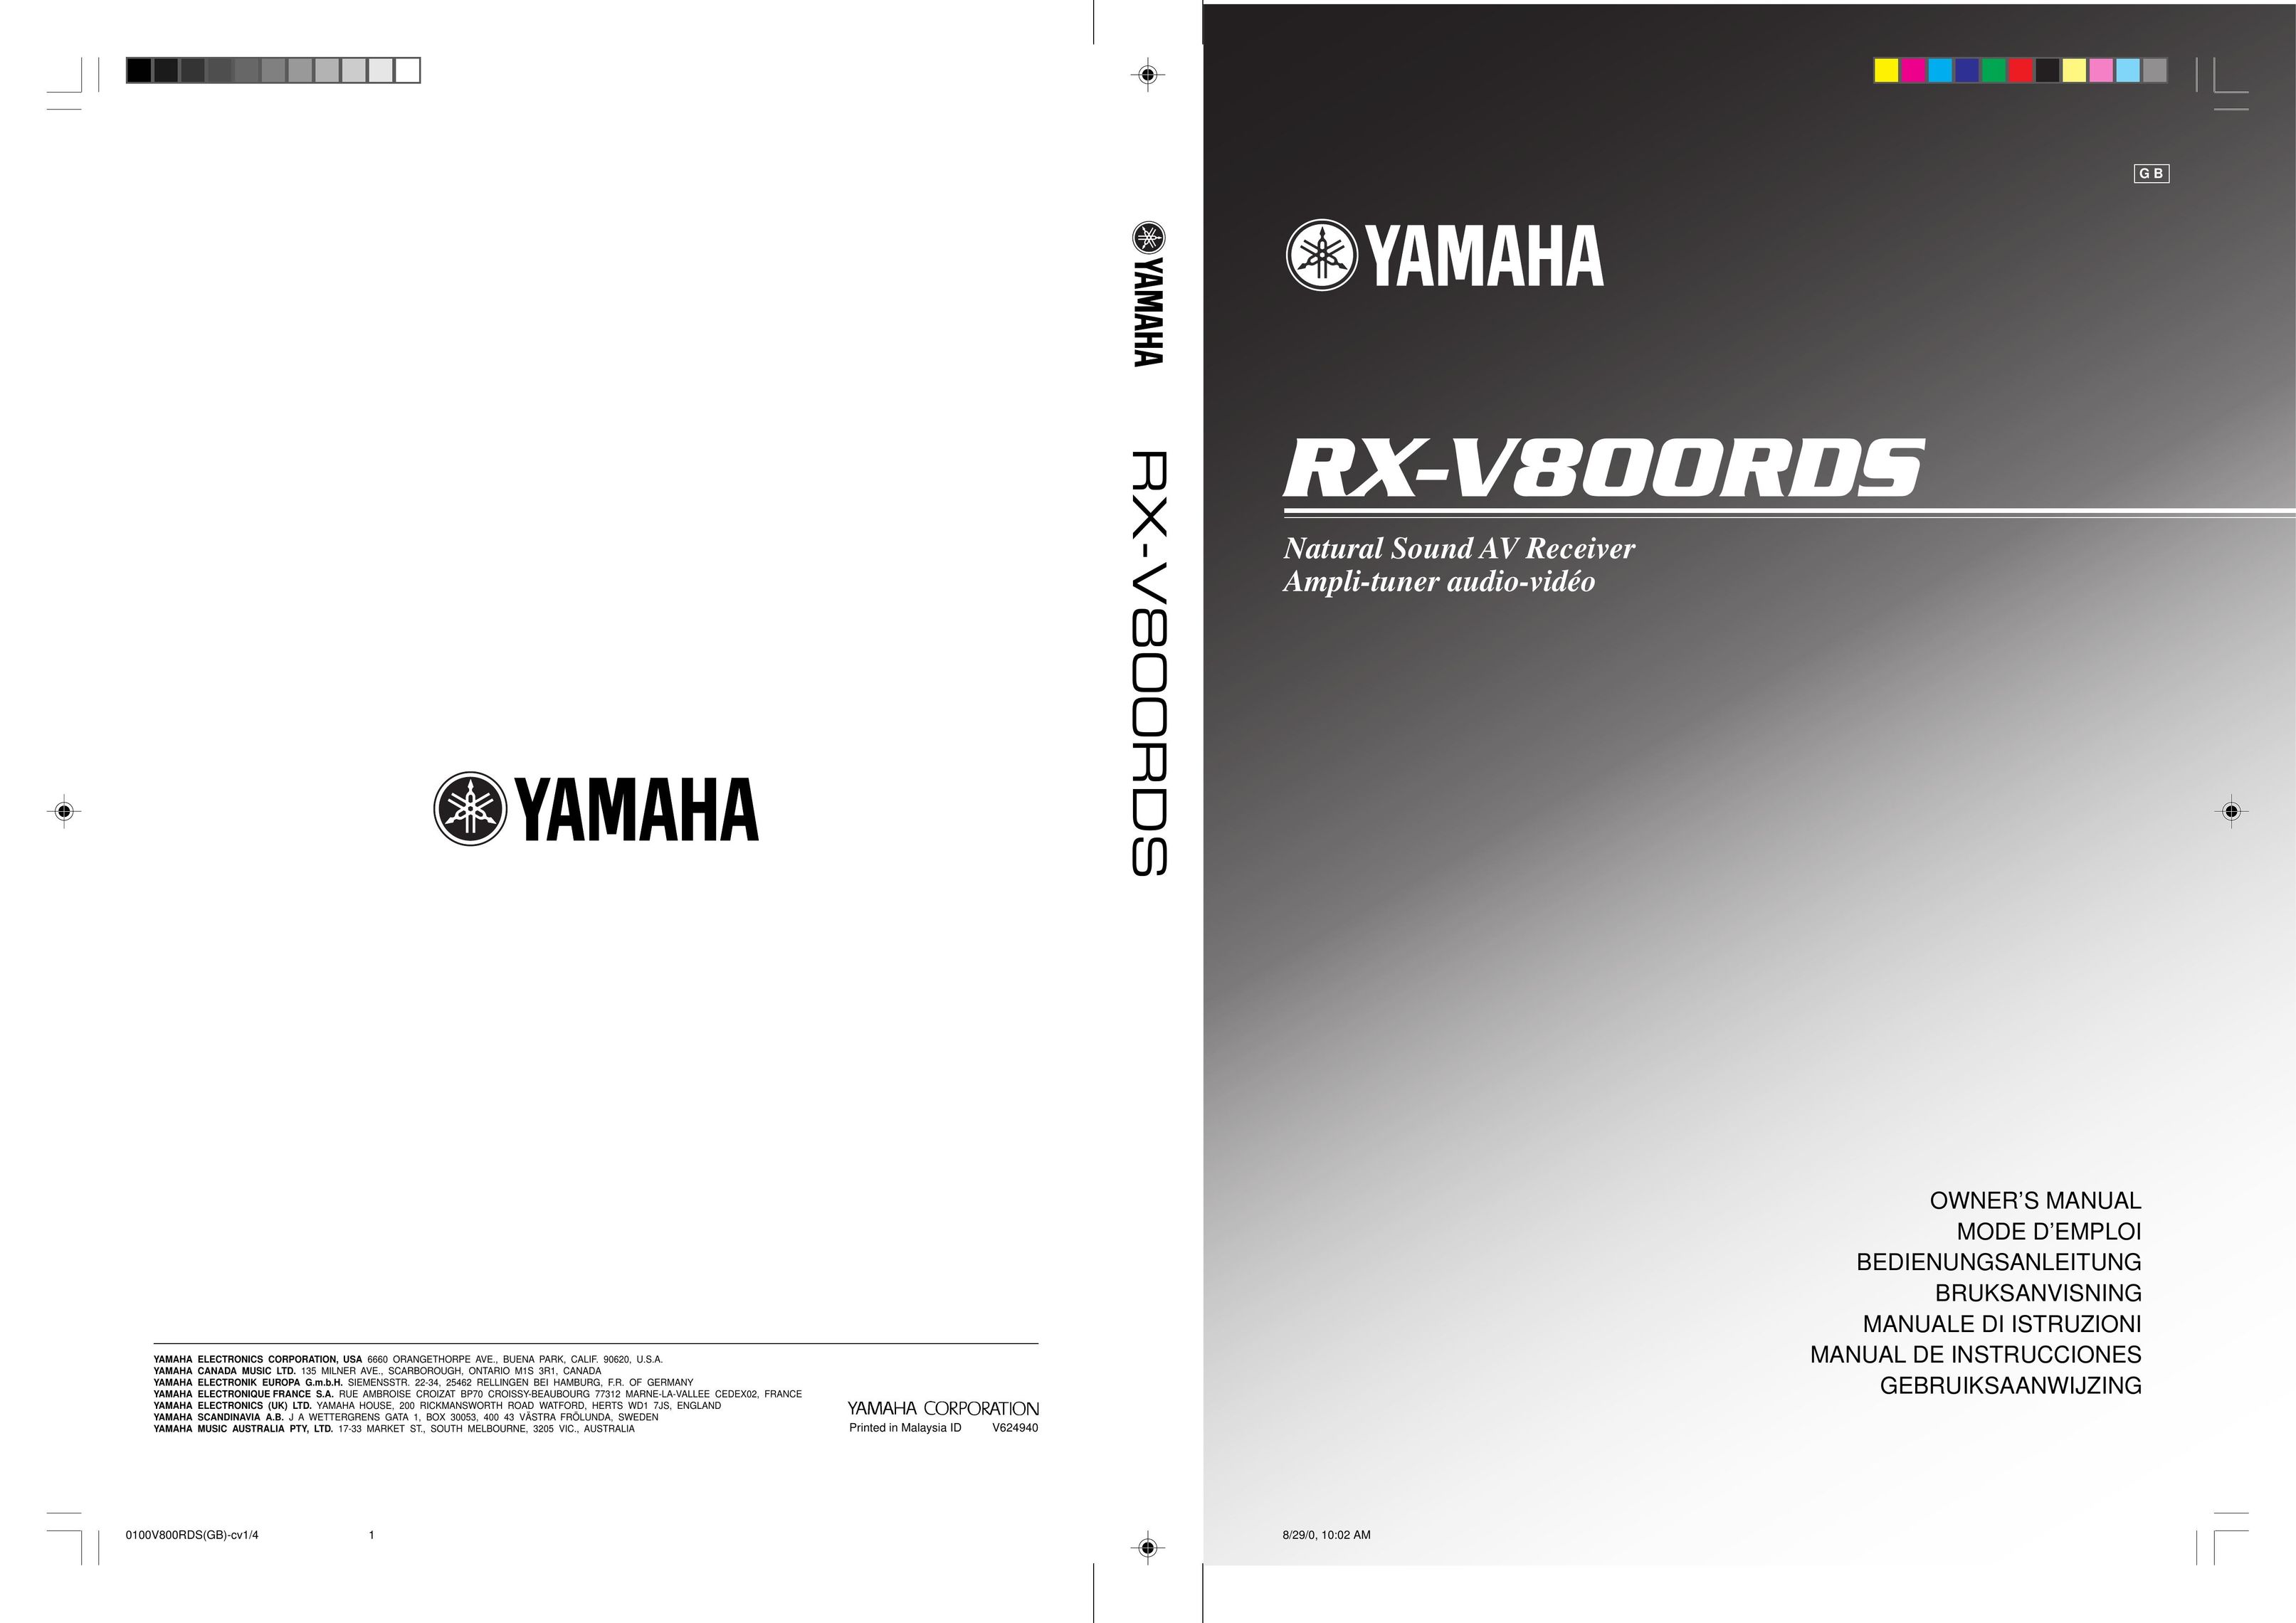 Yamaha RX-V800RDS TV Cables User Manual